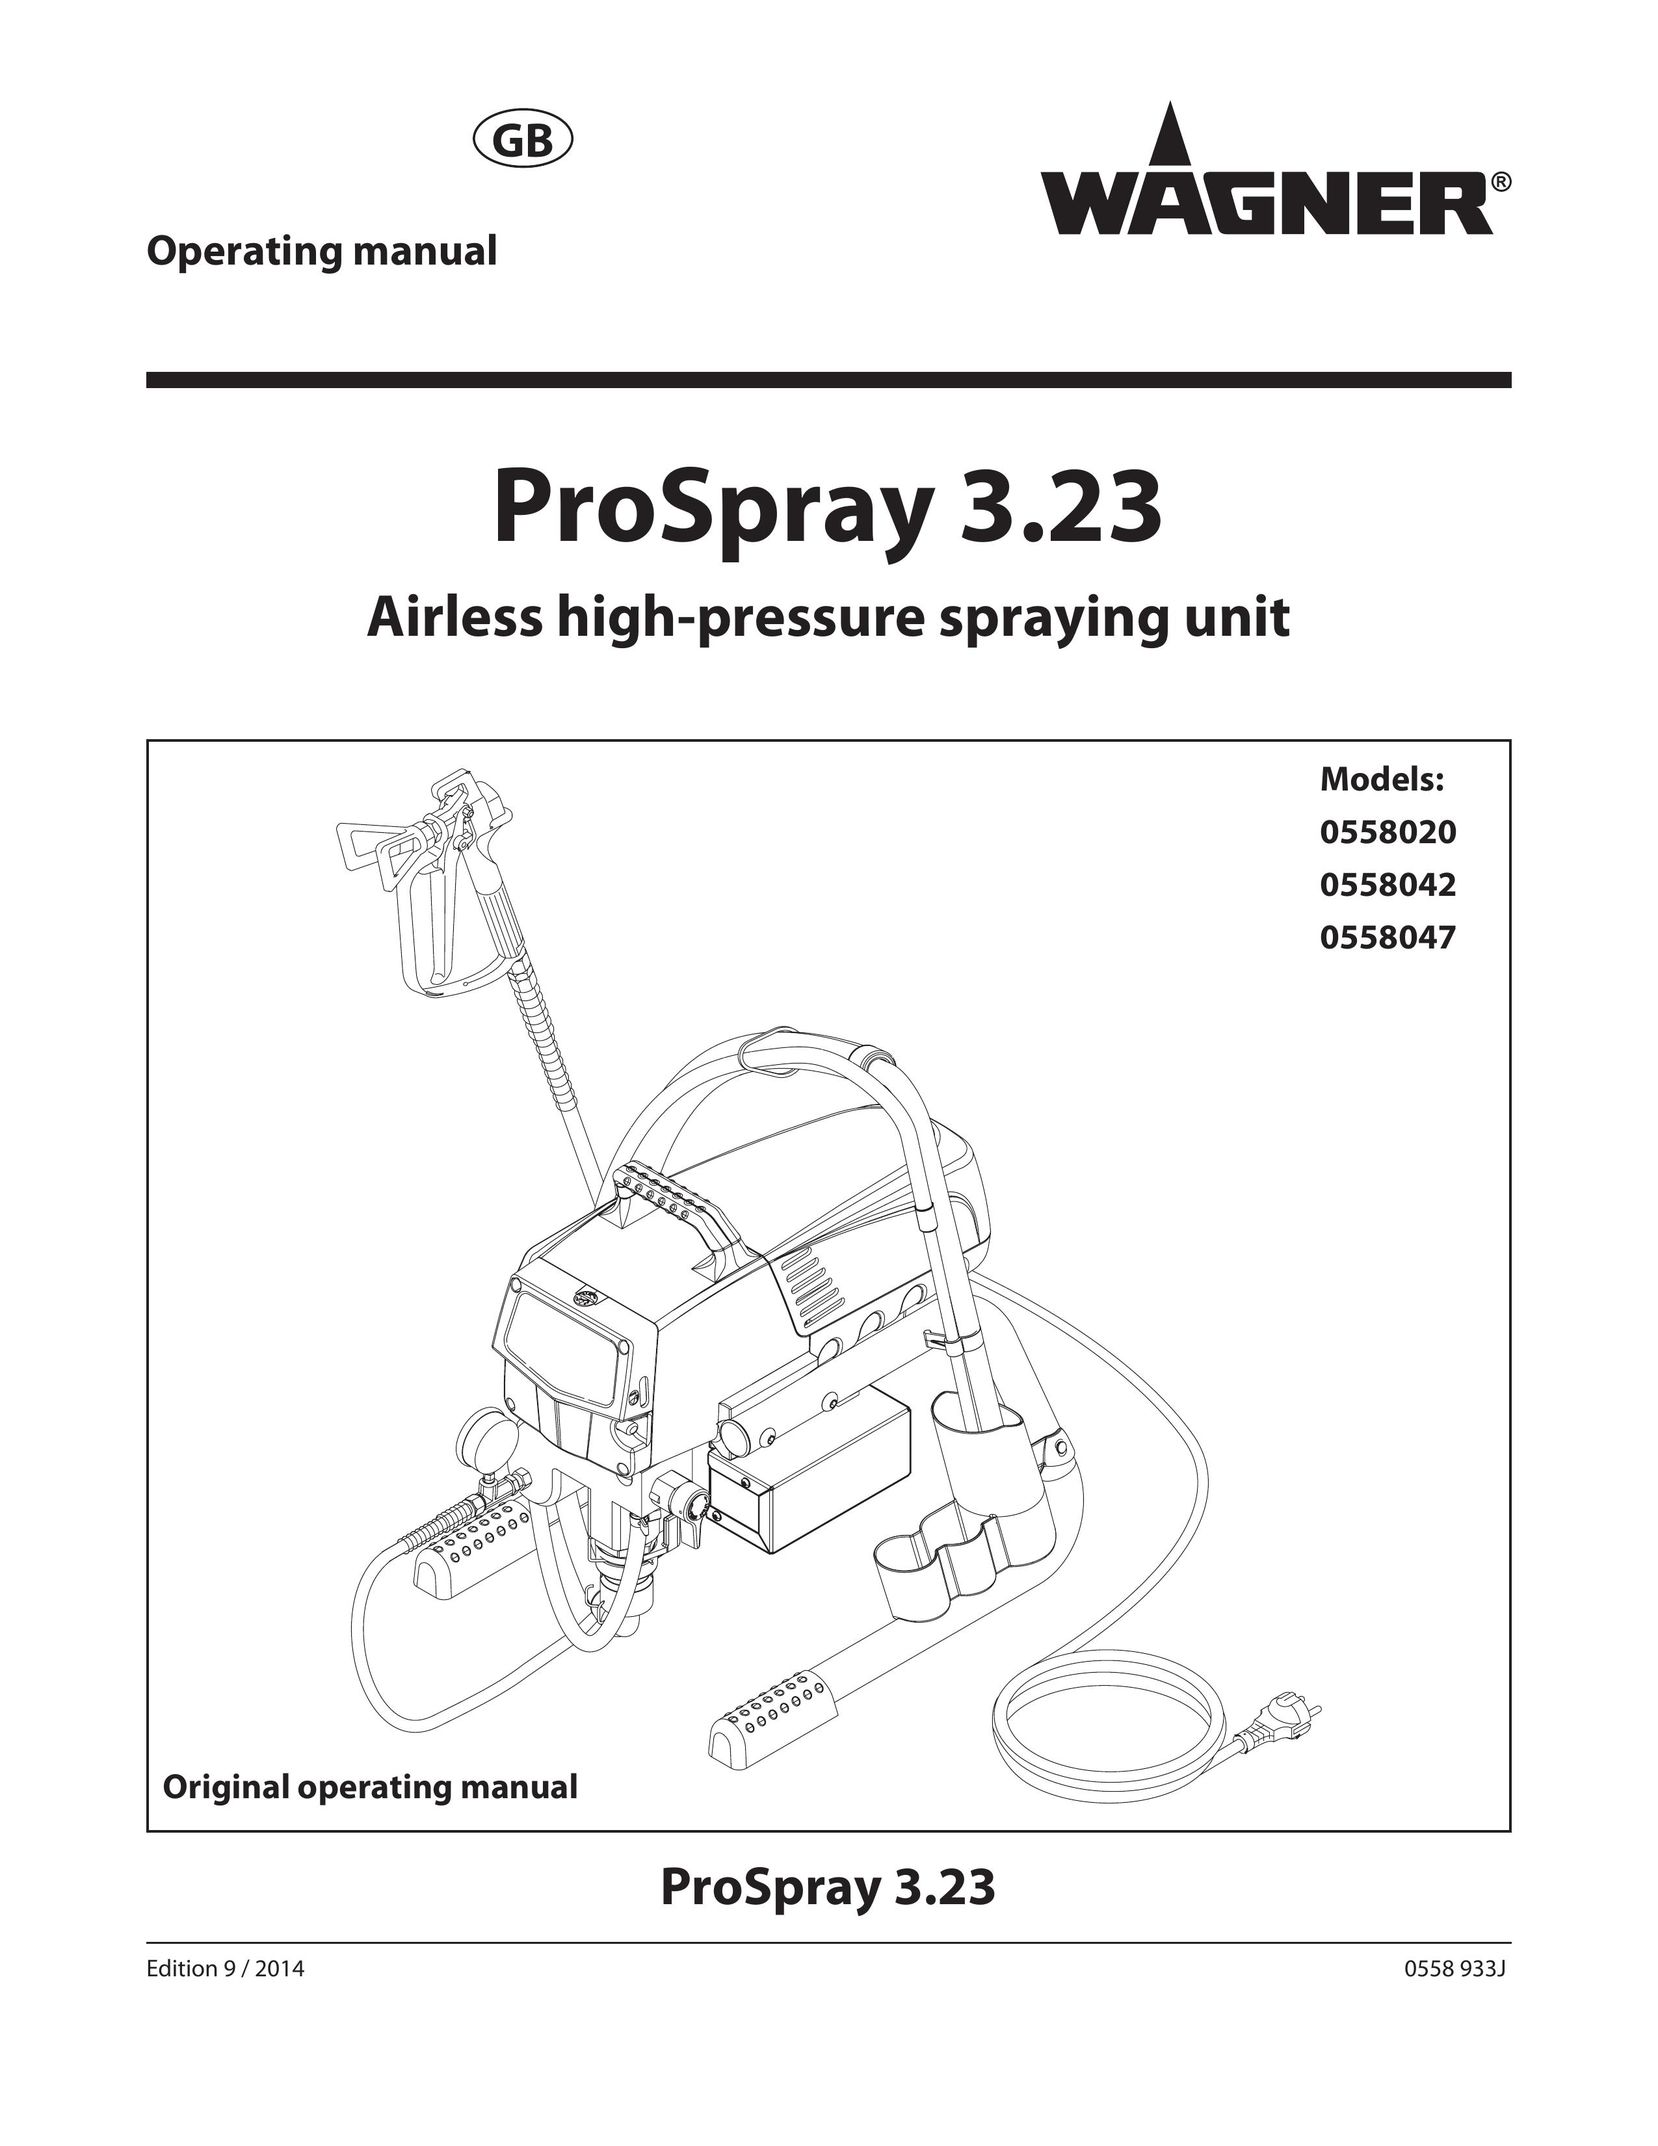 Wagner SprayTech 558042 Paint Sprayer User Manual